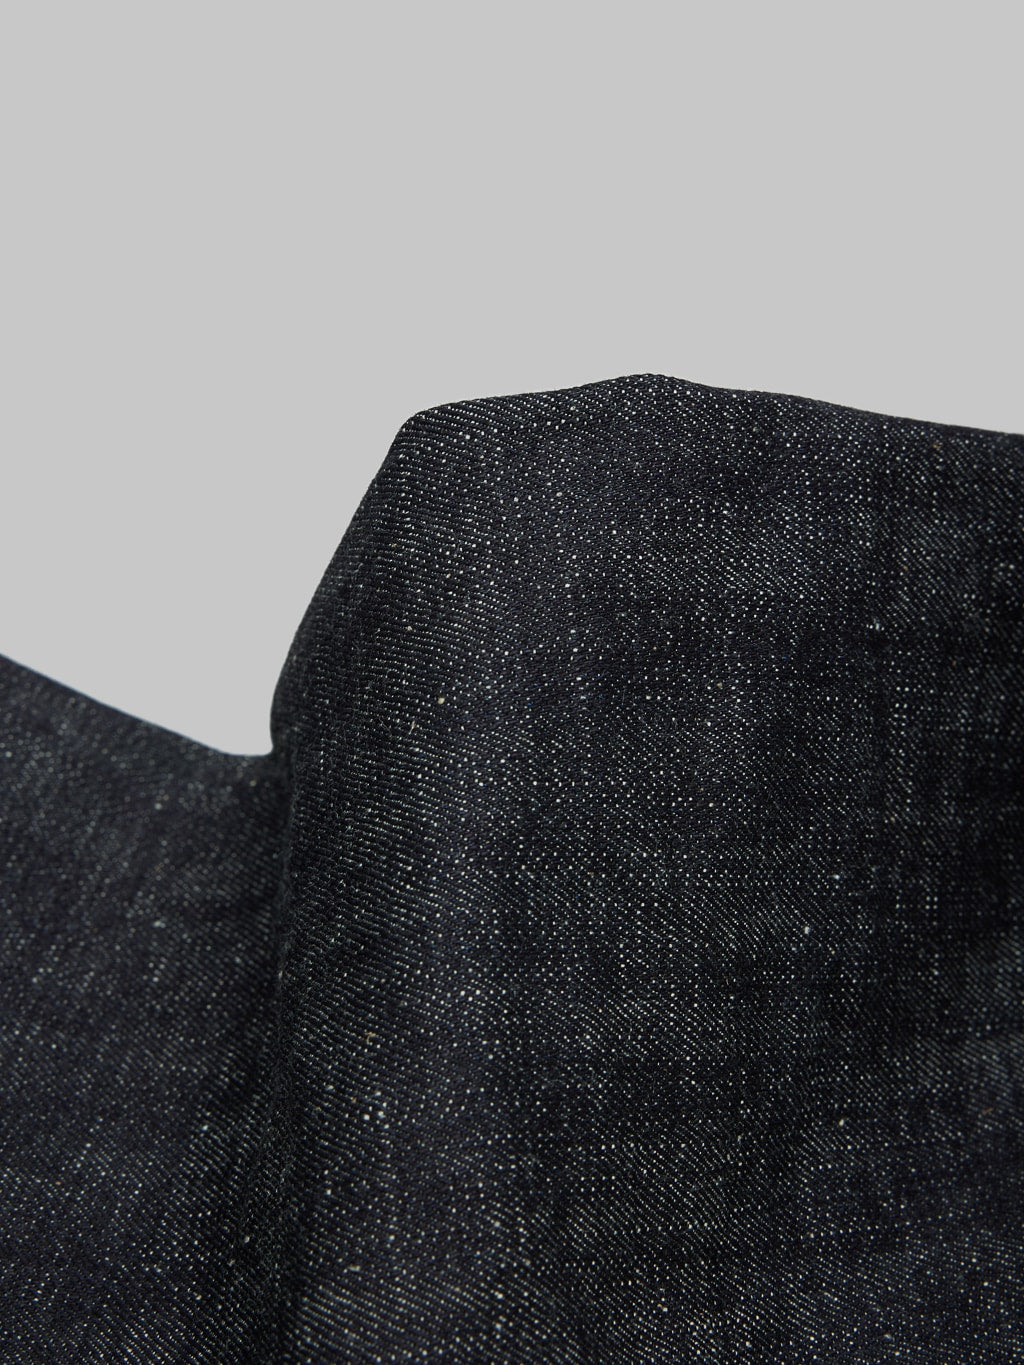 momotaro jeans 0605 82 16oz texture denim natural tapered texture